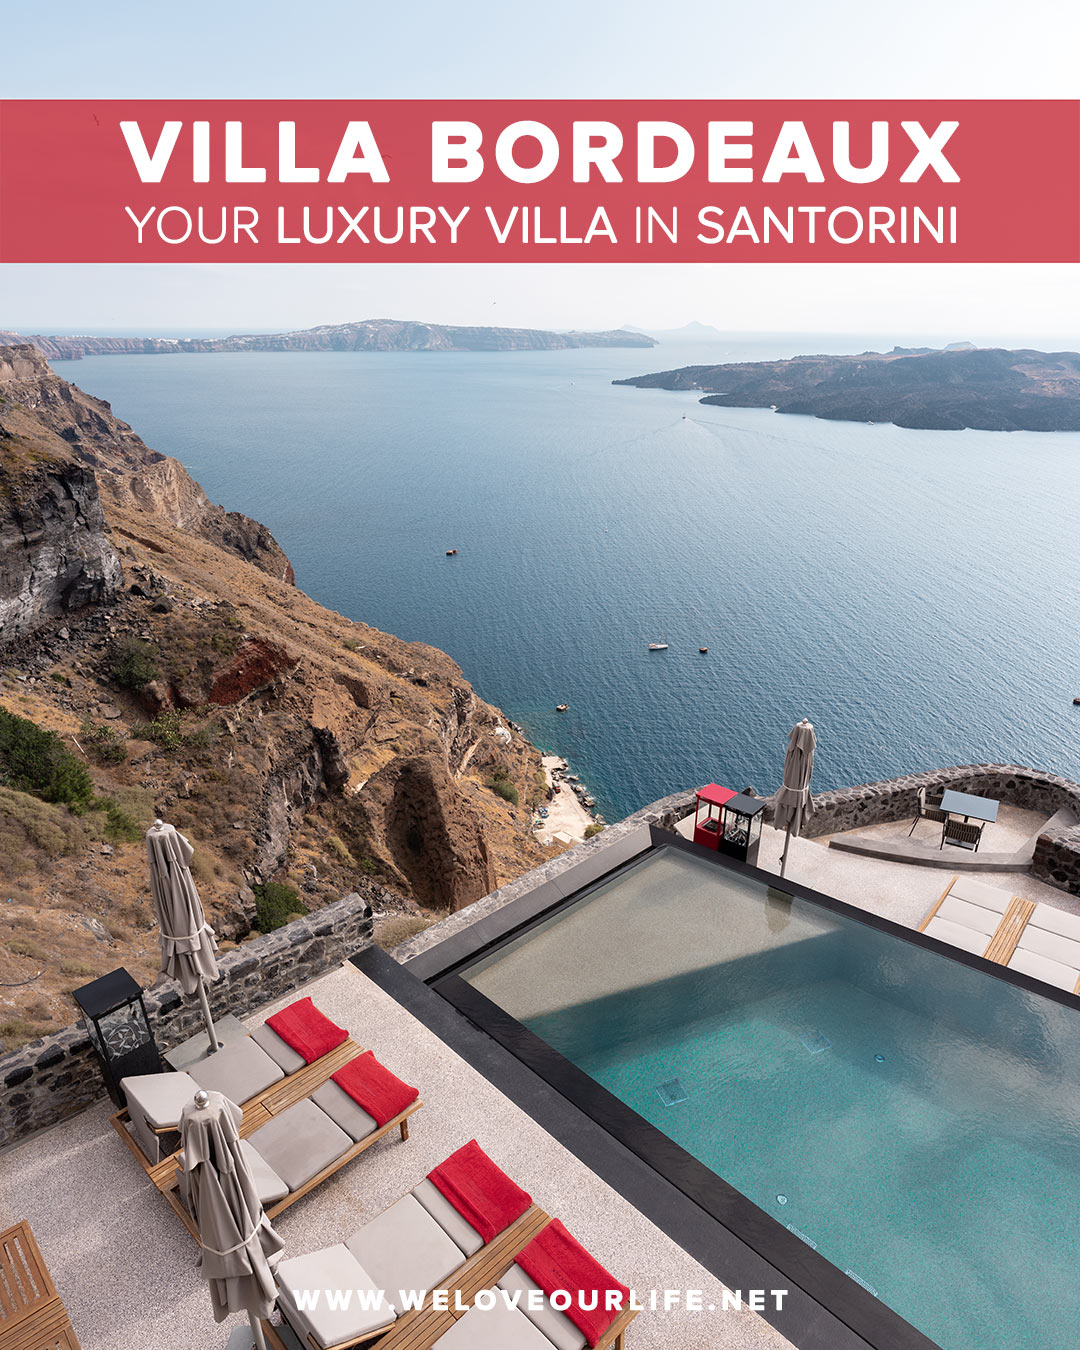 Villa Bordeaux - Your Luxury Villa in Santorini Greece